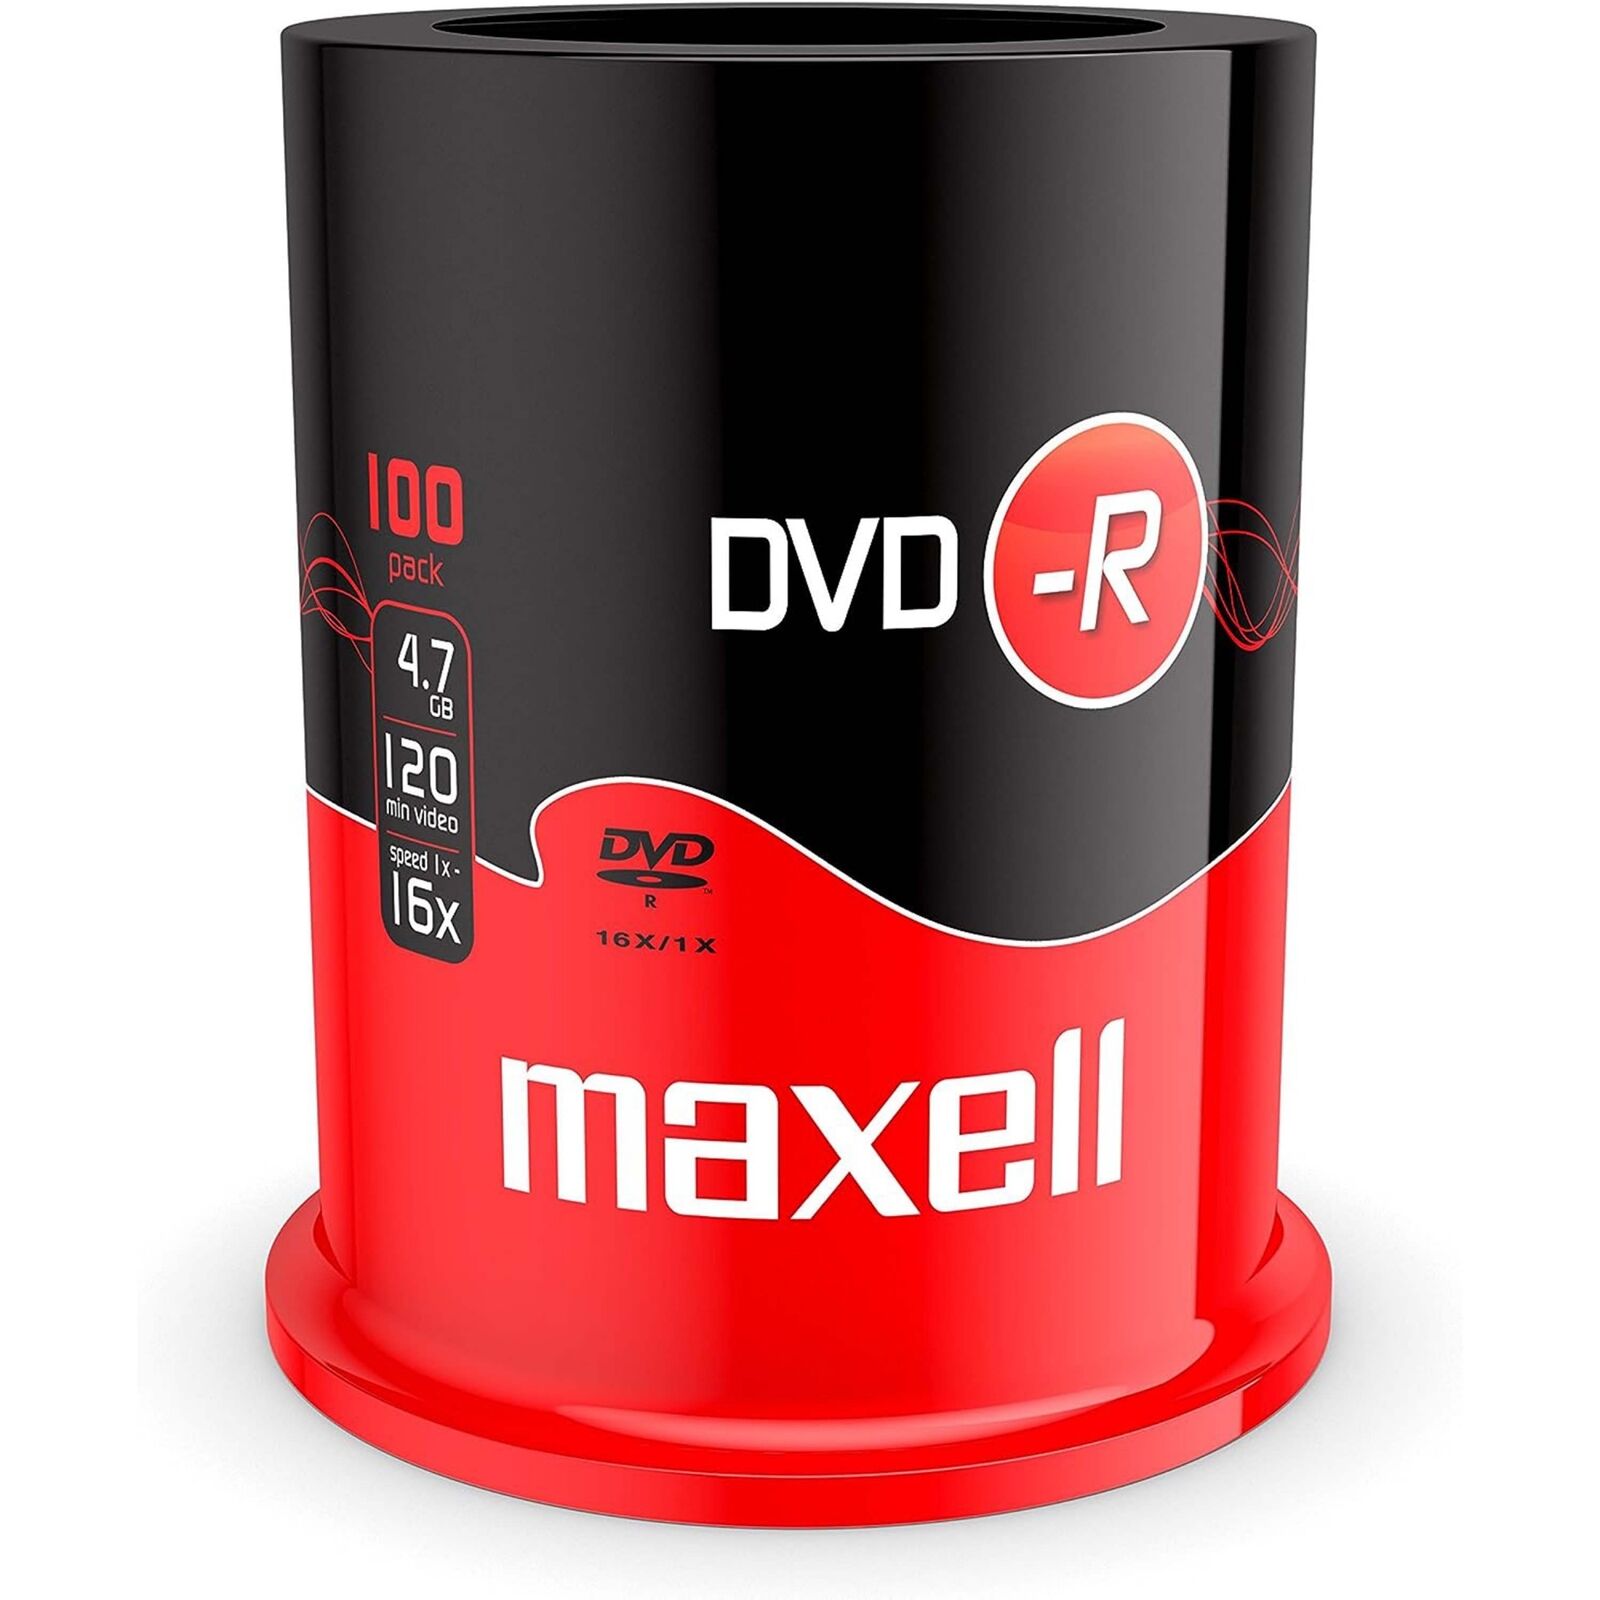 Bell Cake 100x DVD+R 4.7gb 120min 16x Single Layer Maxell Movie Music PC _